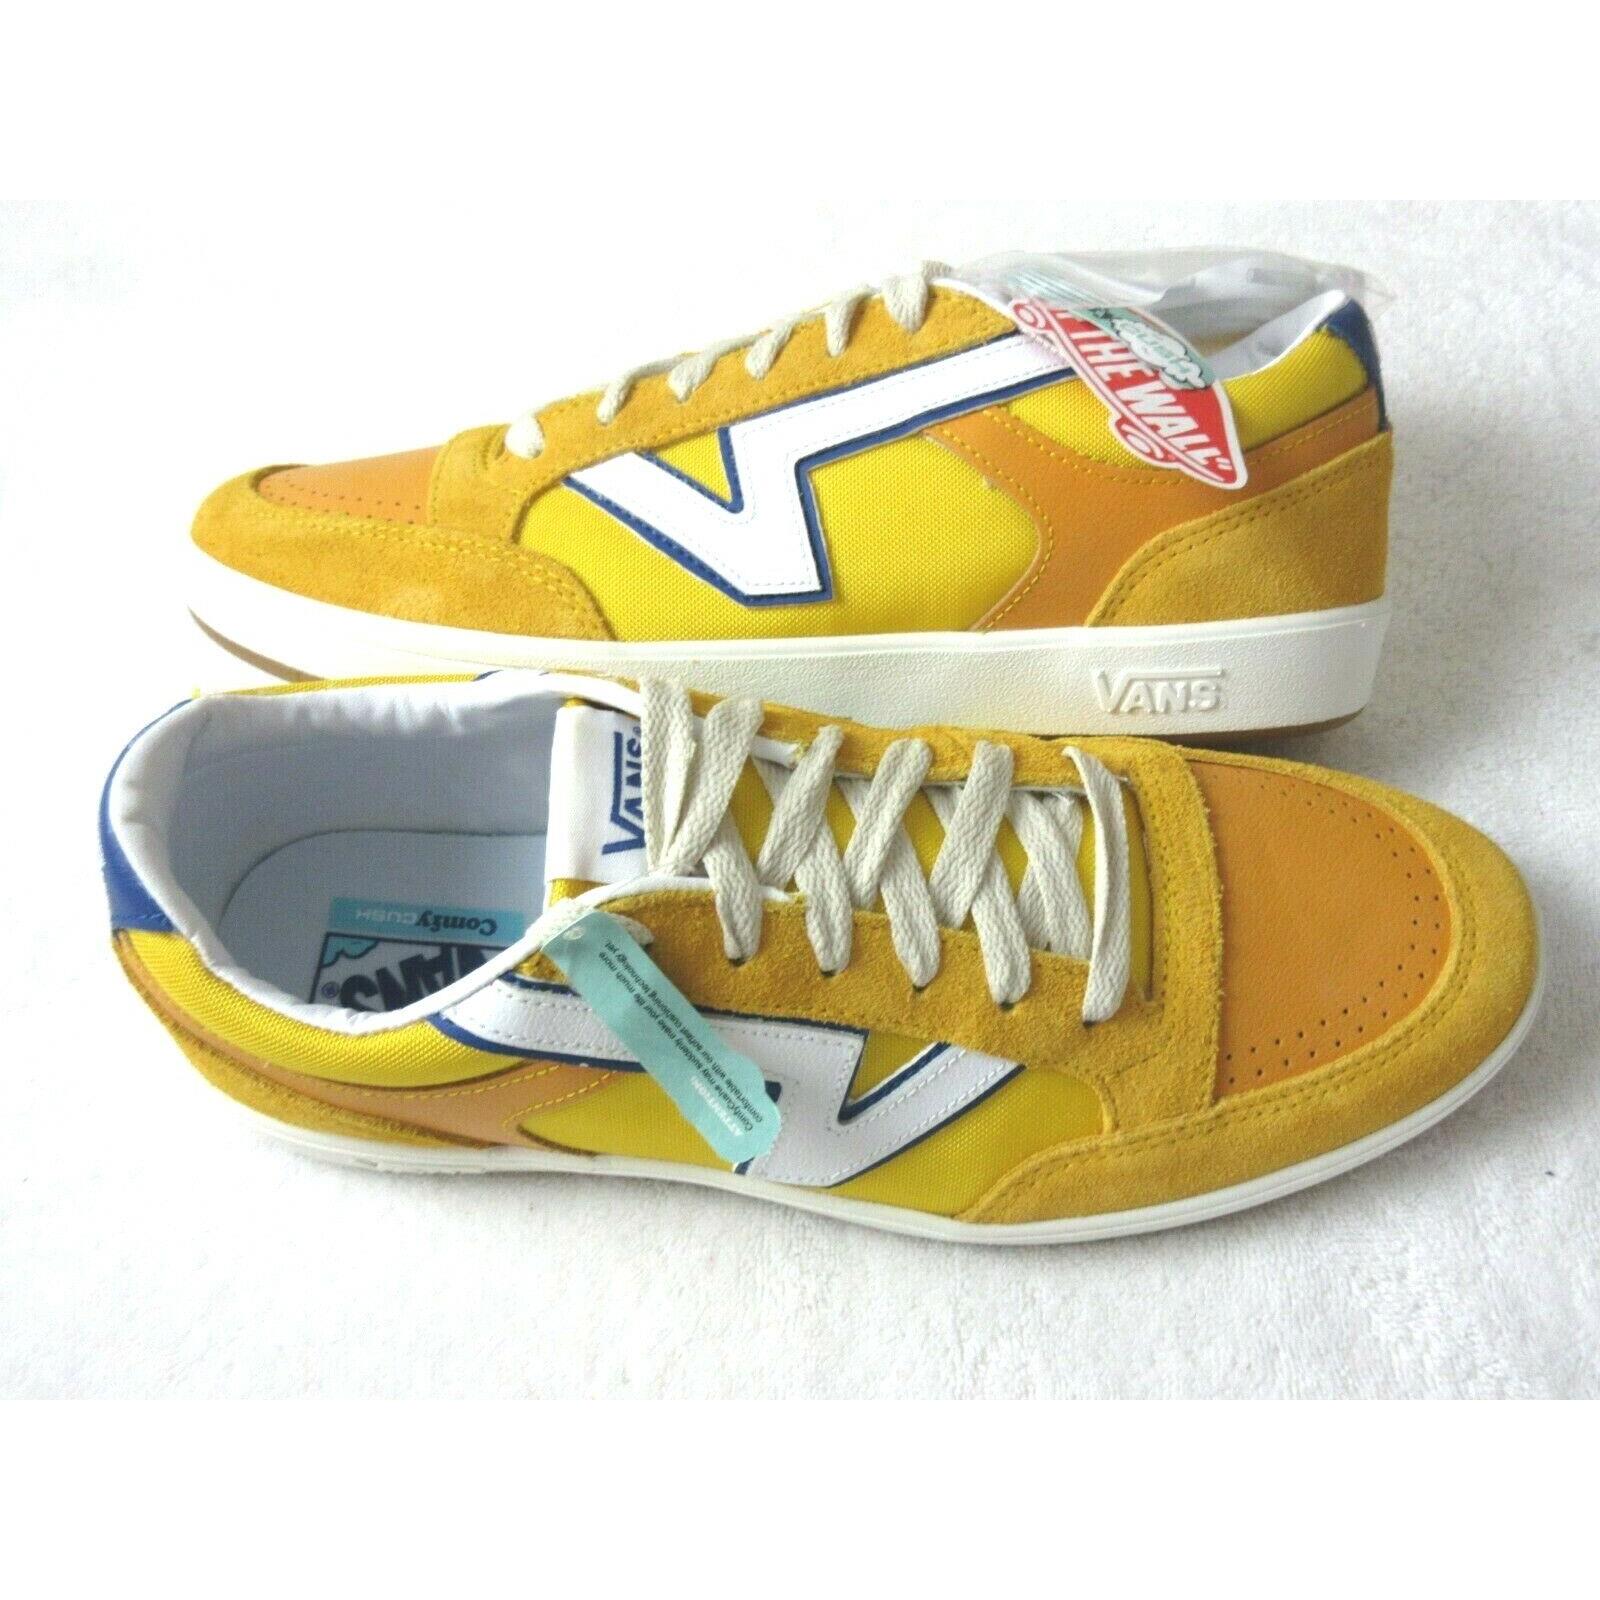 Vans Men`s Lowland Cc Serio Collection Skate Shoes Golden Yellow Blue Size 10.5